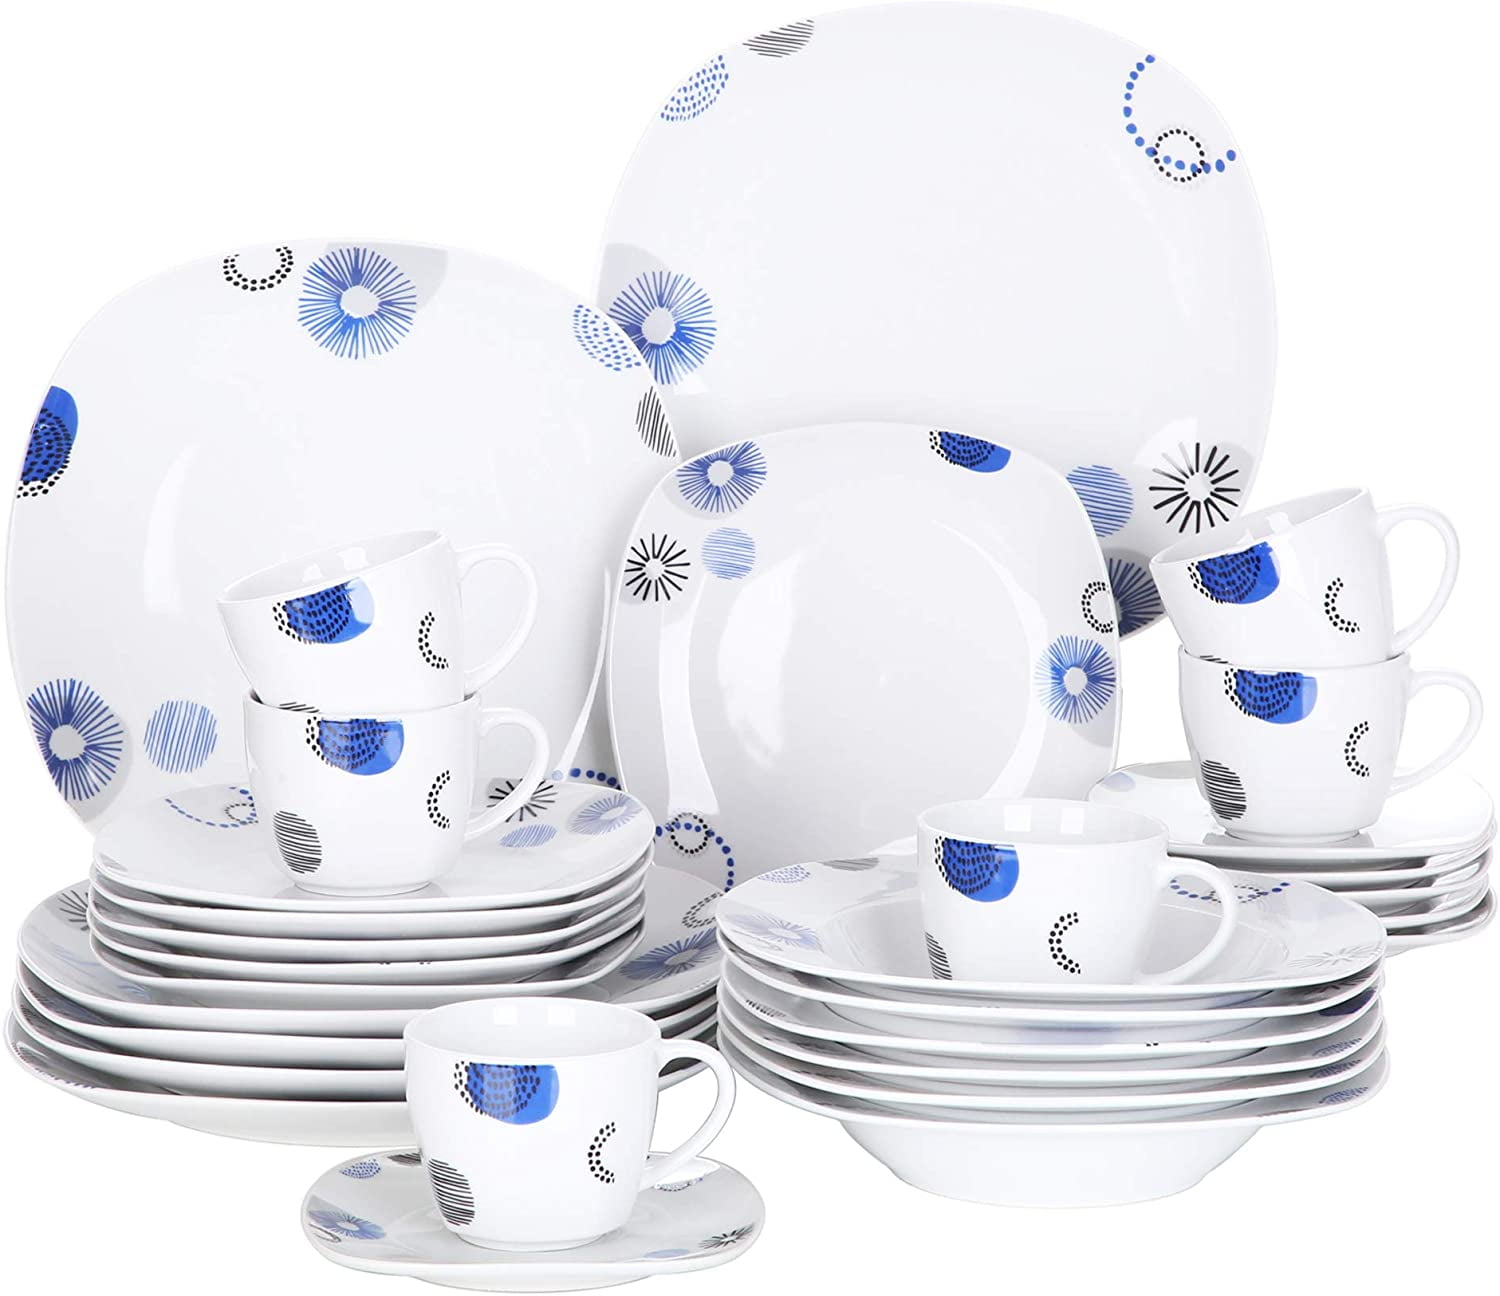 6x Consomme soup bowl white porcelain dinner serving bowls 300ml wiht saucer 